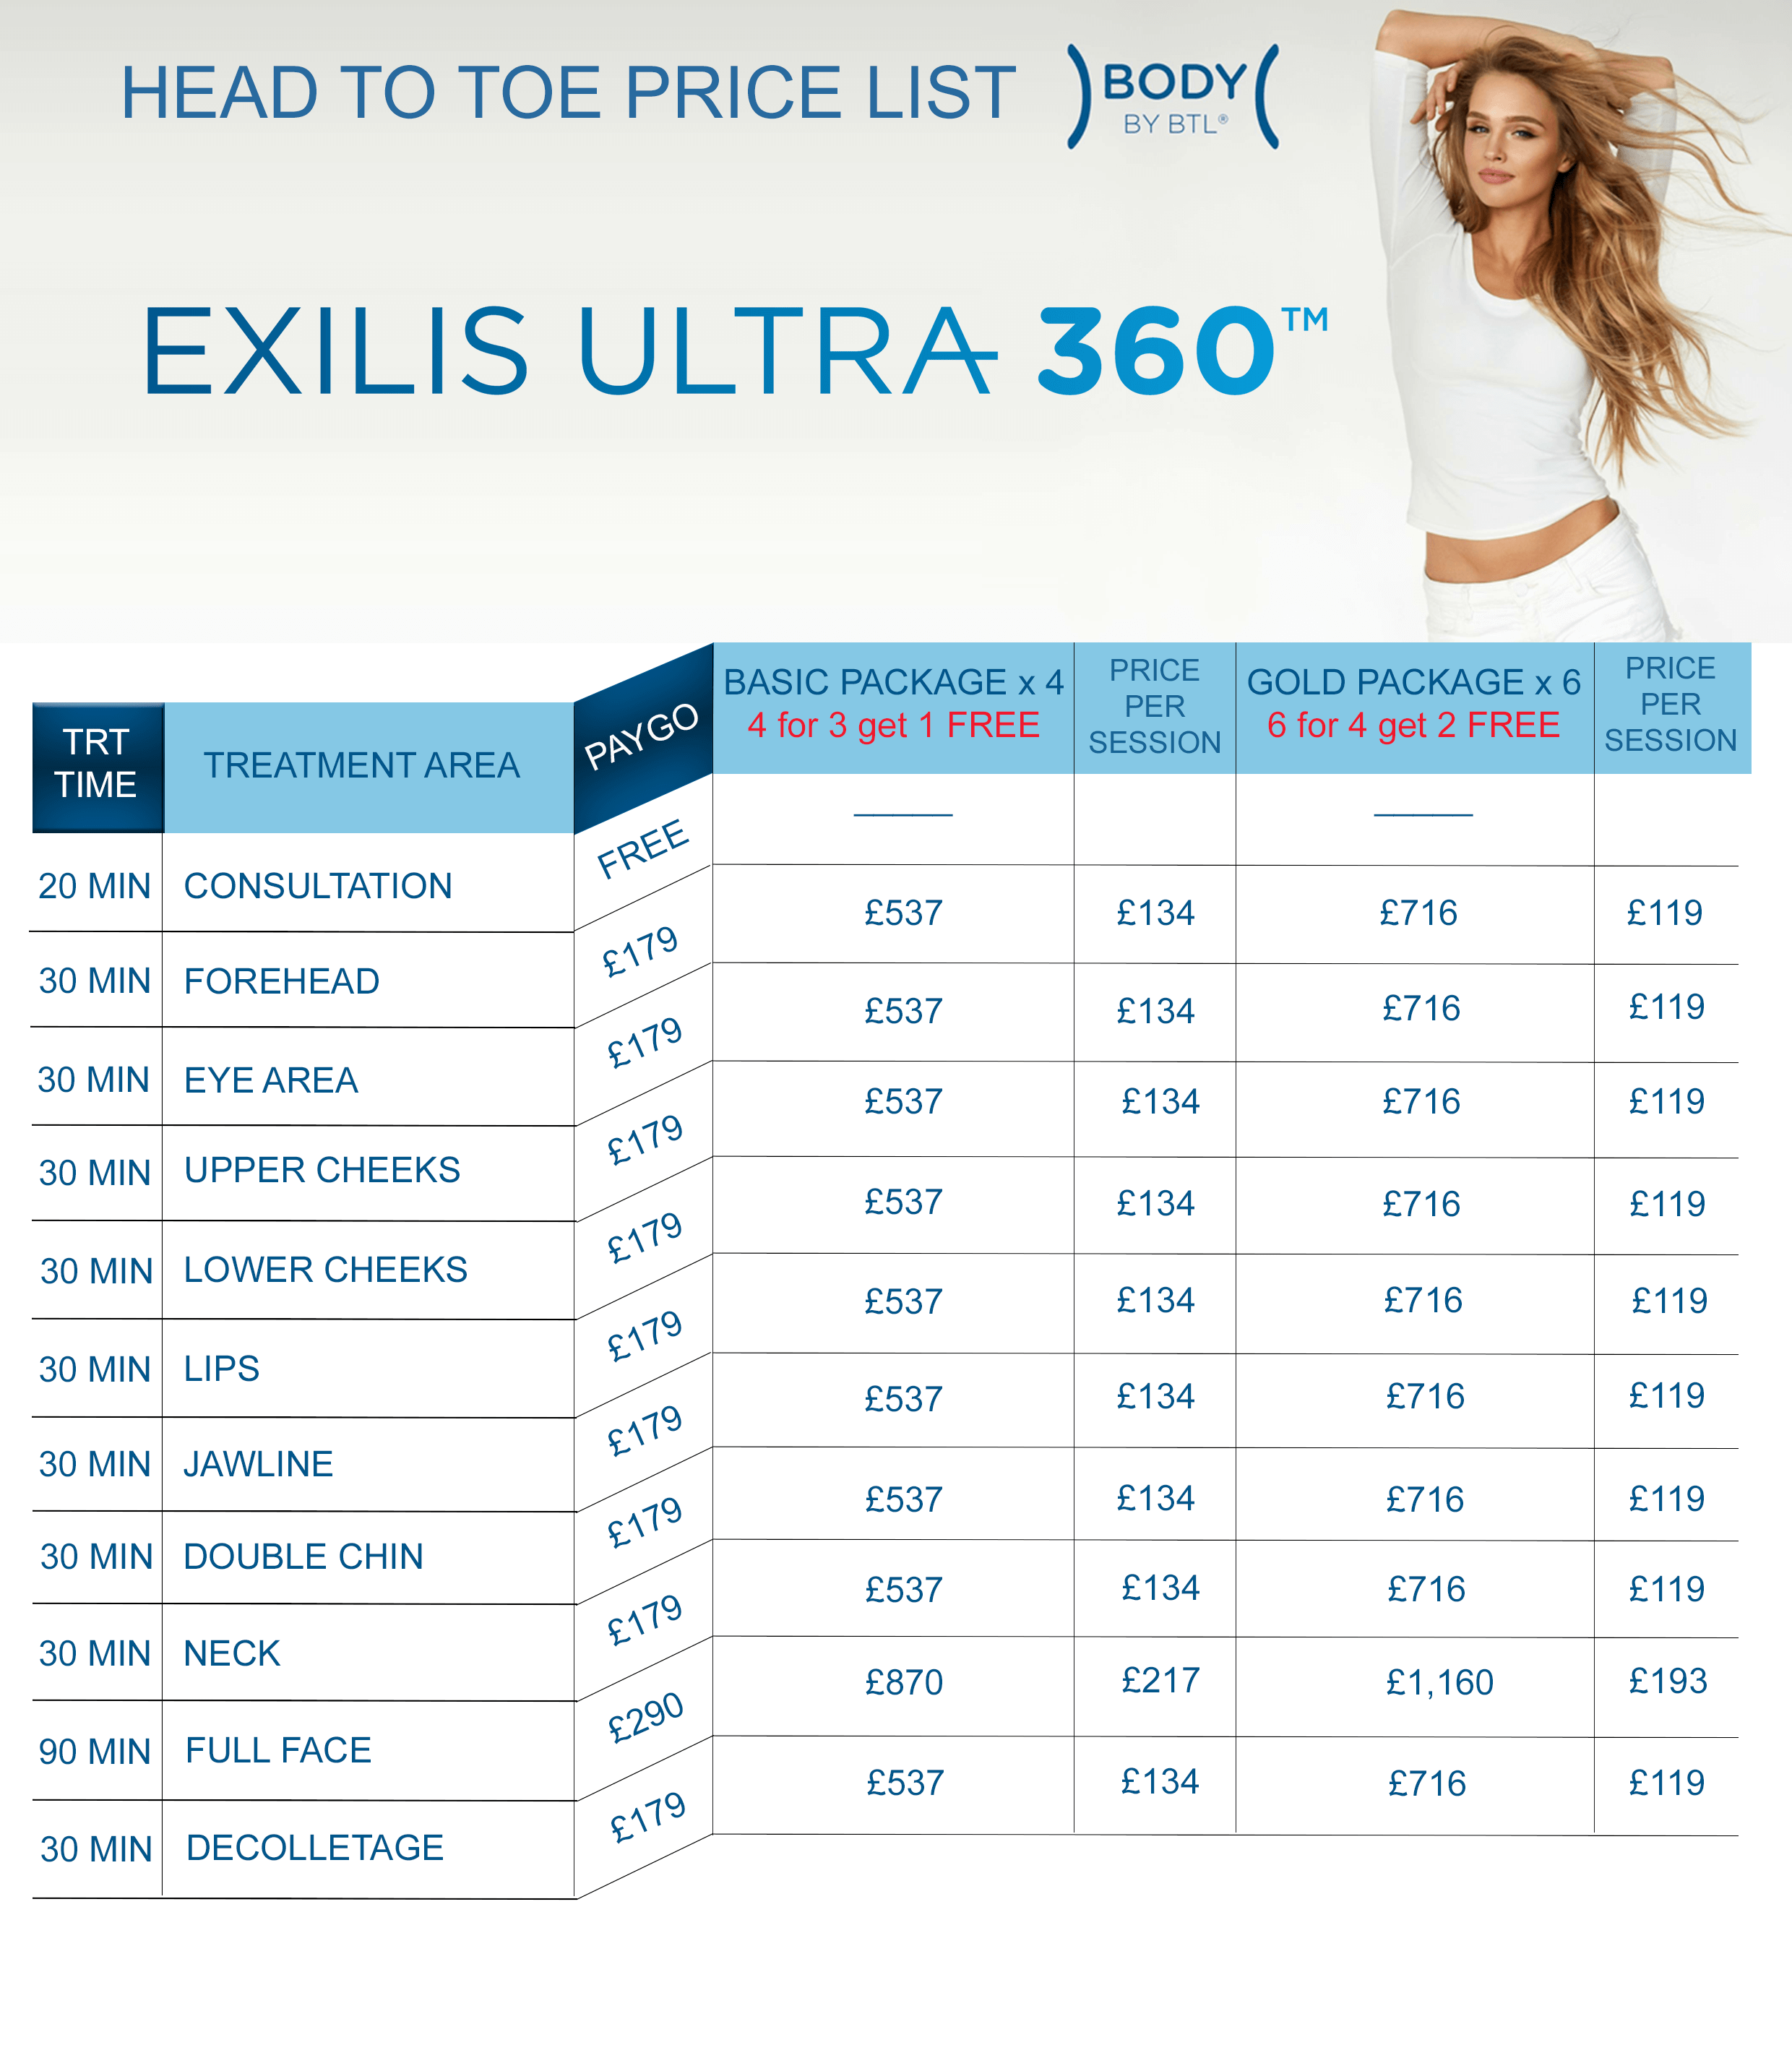 exilis ultra 360 prices in london wimbledon clinic aesthetics